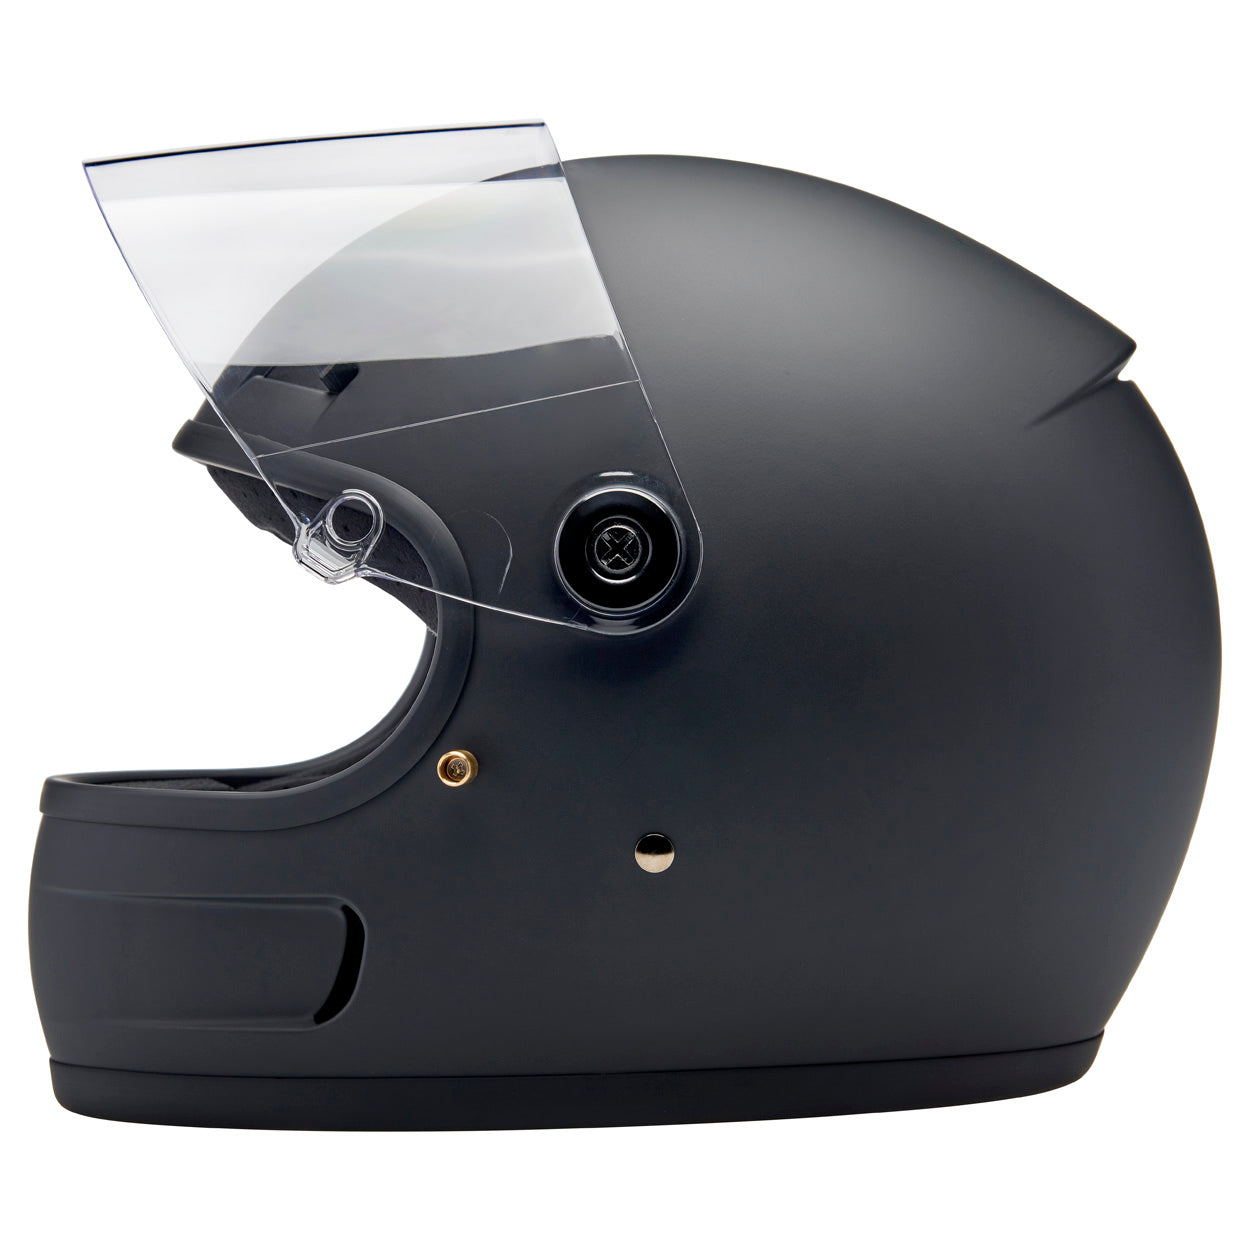 Gringo SV ECE R22.06 Helmet - Flat Black